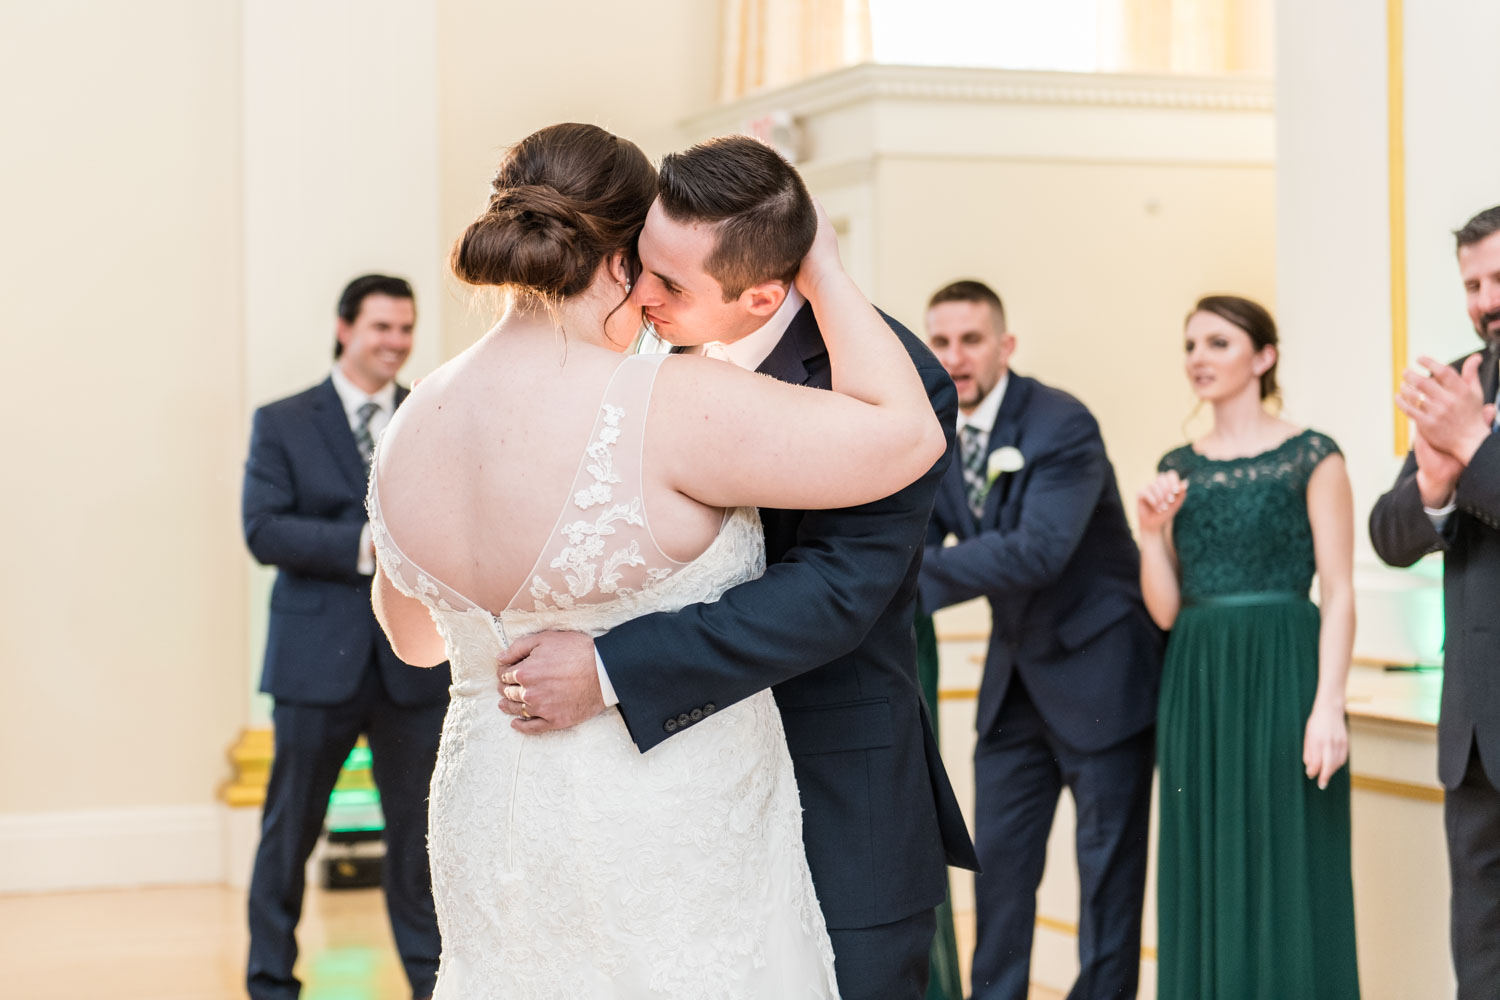 Katelyn + Joe | St. Patrick's Day Topsfield Commons Spring Wedding | Boston and New England Wedding Photography | Lorna Stell Photo